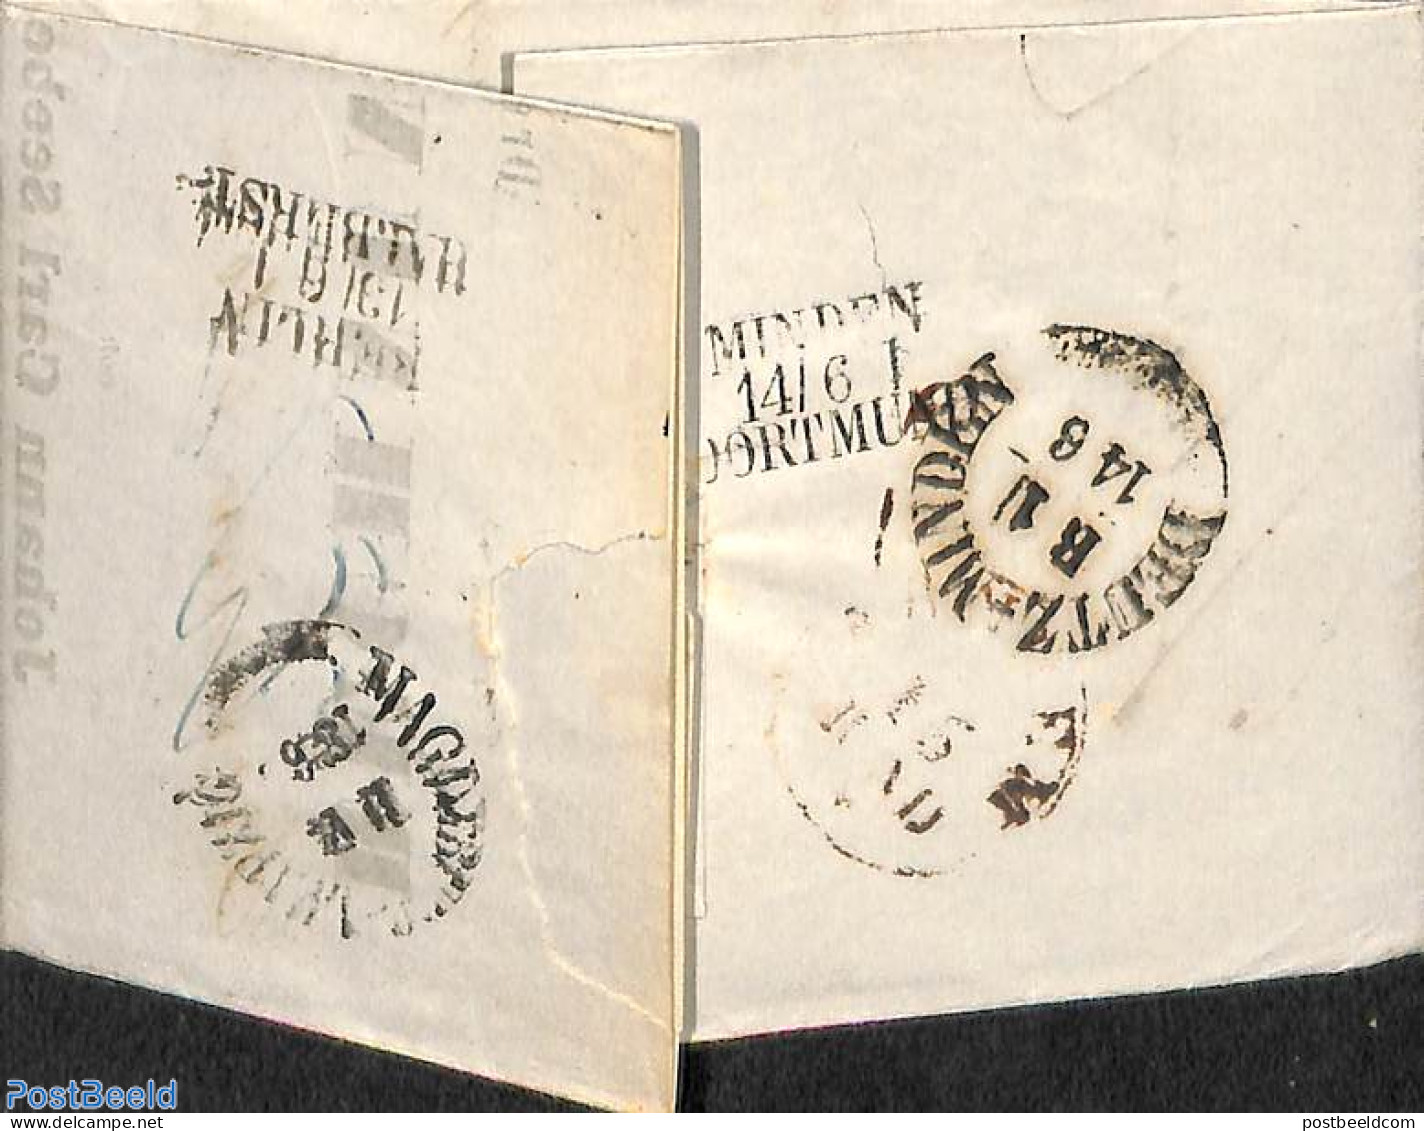 Germany, Empire 1852 Folding Letter From Dresden To Arnhem (NL), Various Traject Postmarks On Backside, Postal History - [Voorlopers